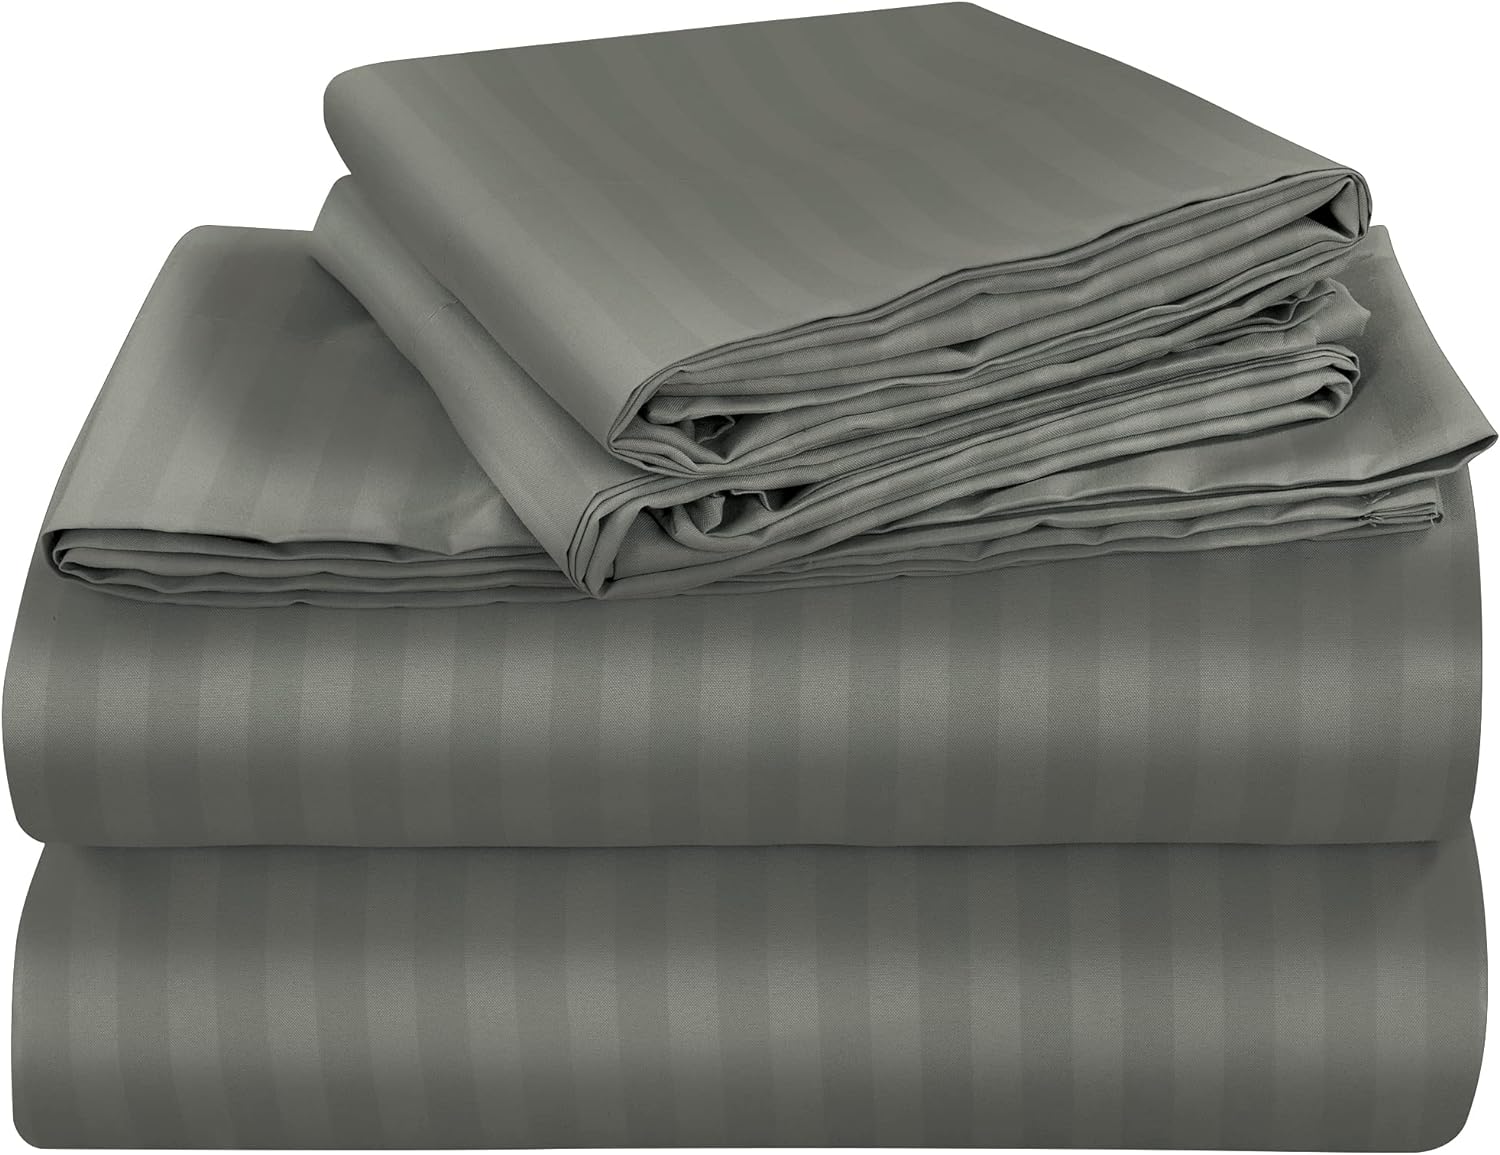 ROYALE LINENS Striped Bed Sheet Set - Brushed Microfiber 1800 Bedding - 1 Fitted Sheet, 1 Flat Sheet, 2 Pillow Cases - Wrinkle & Fade Resistant - 4 Piece Damask Stripe Full Bed Sheet Set (Full, Grey)